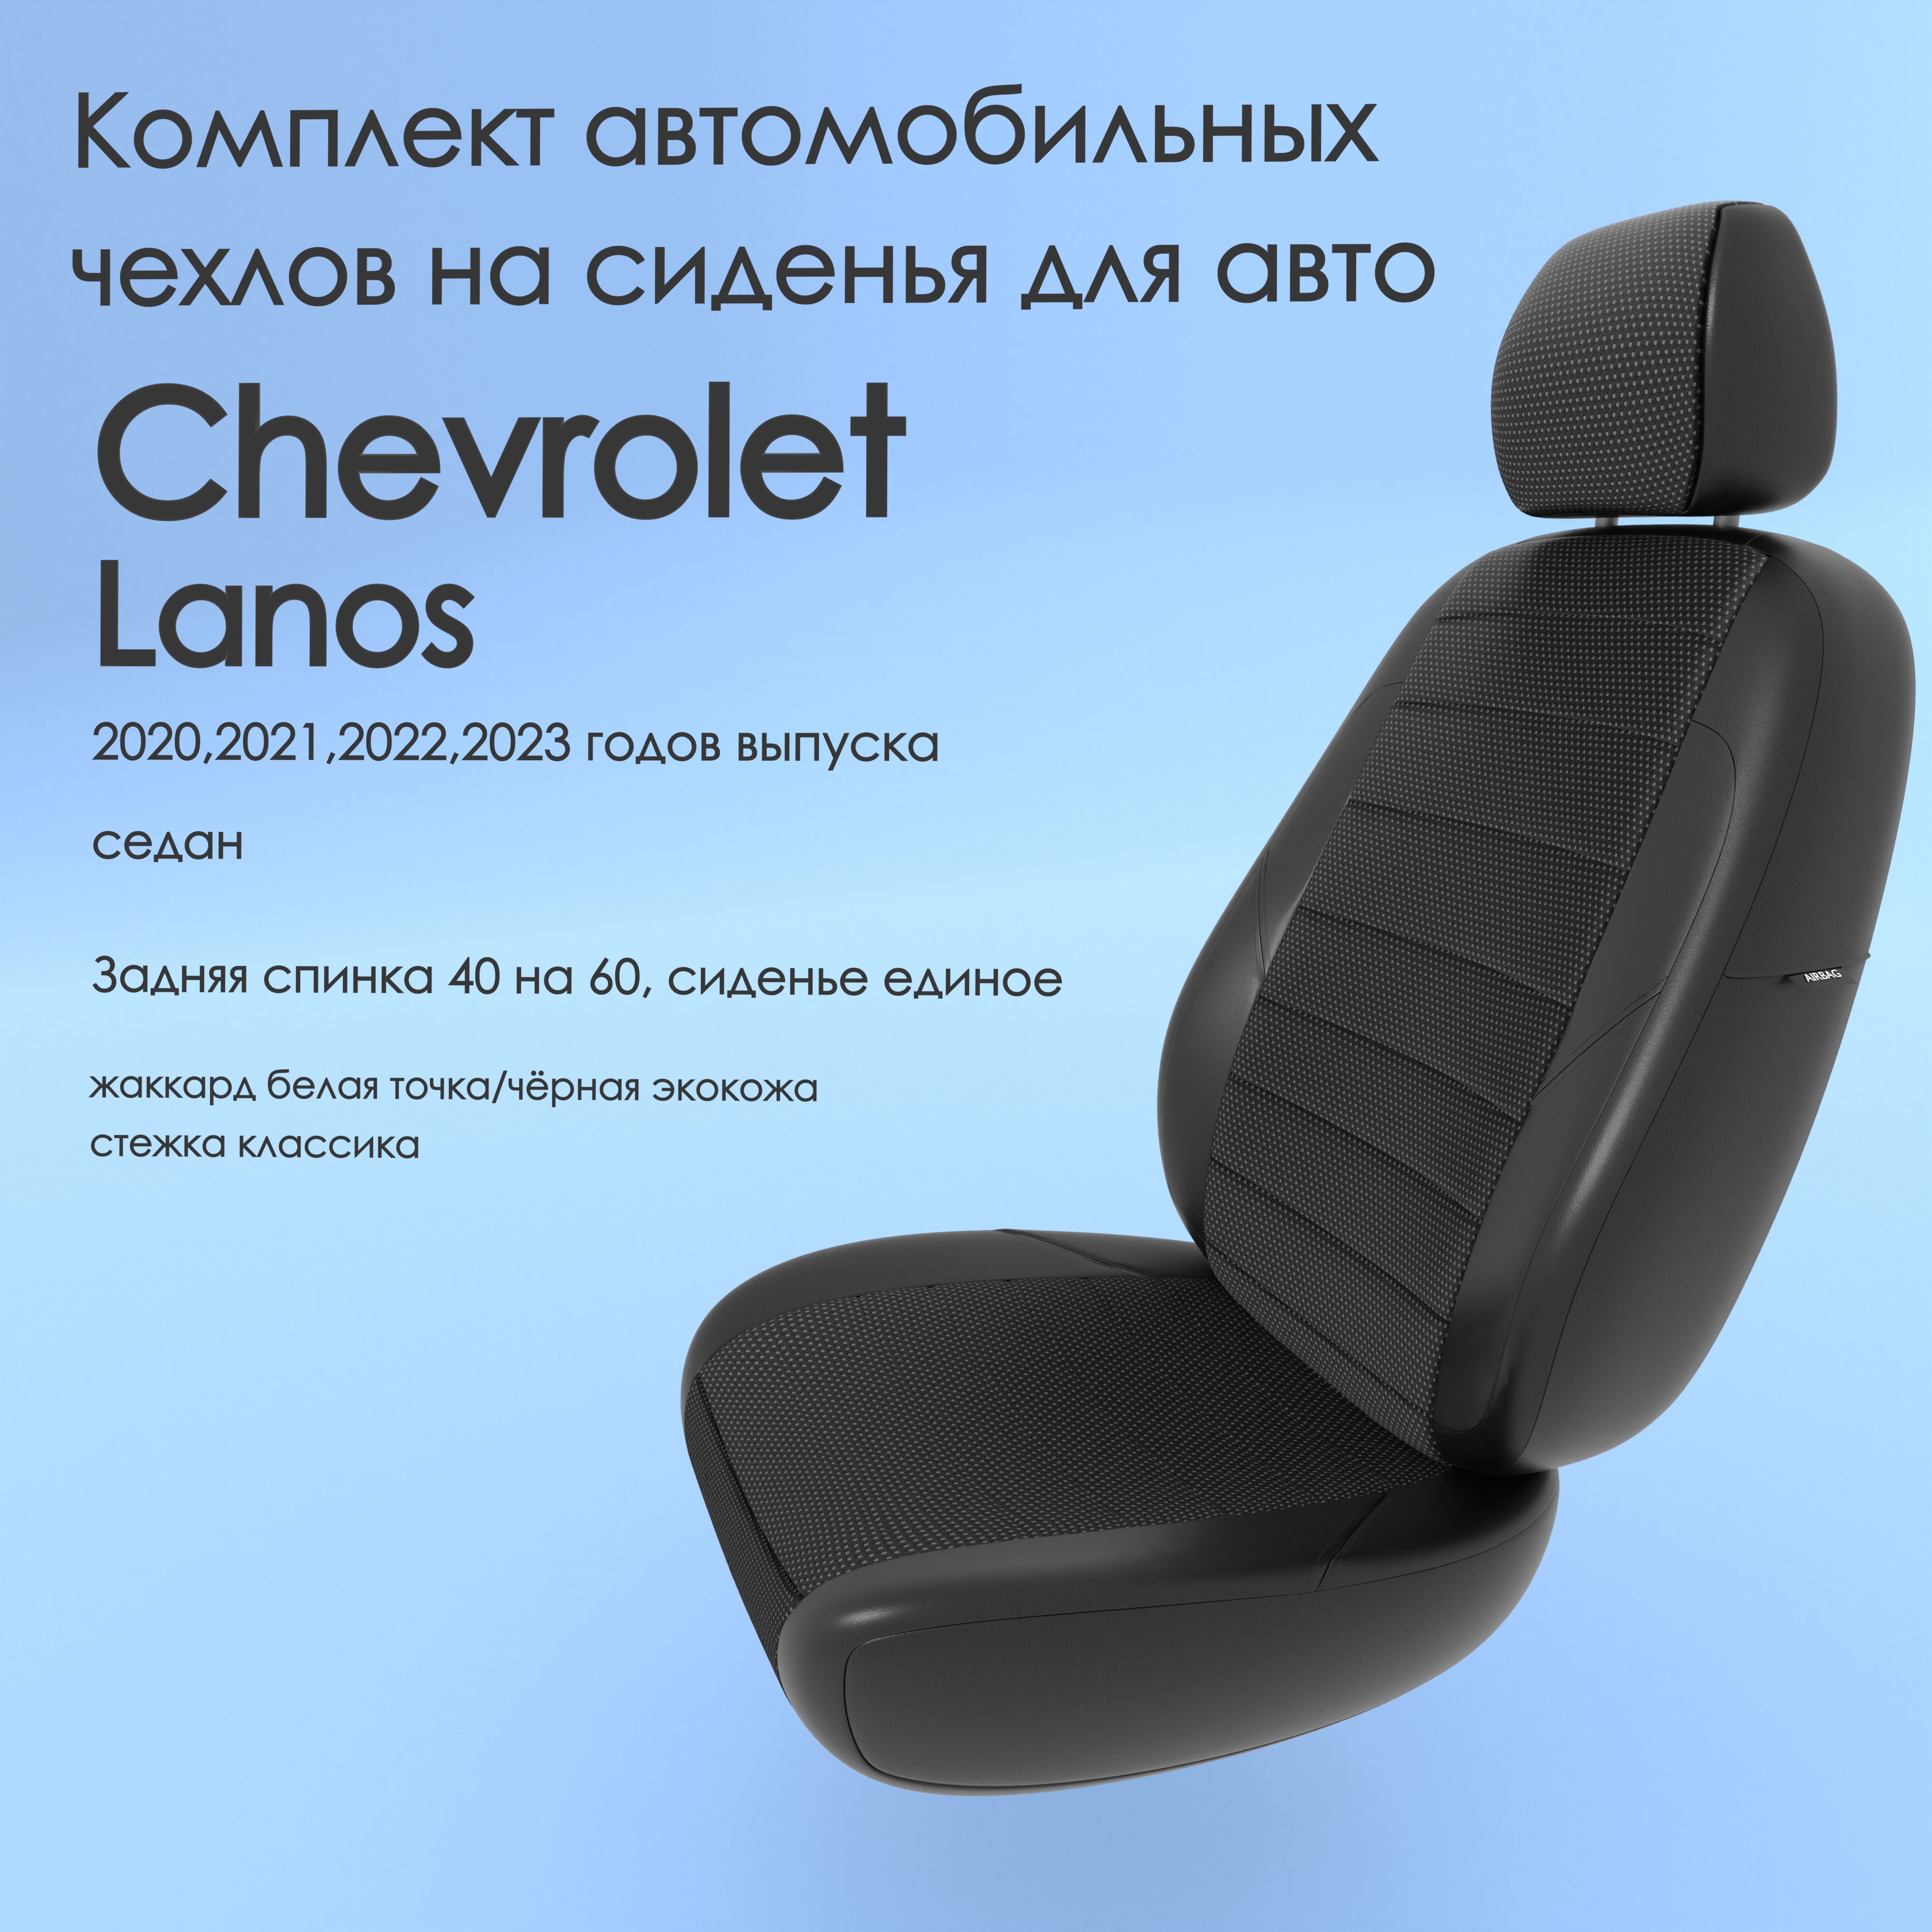 Чехлы Чехломания Chevrolet Lanos 2020,2021,2022,2023 седан 40/60 бел-жак/чер-эк/k4